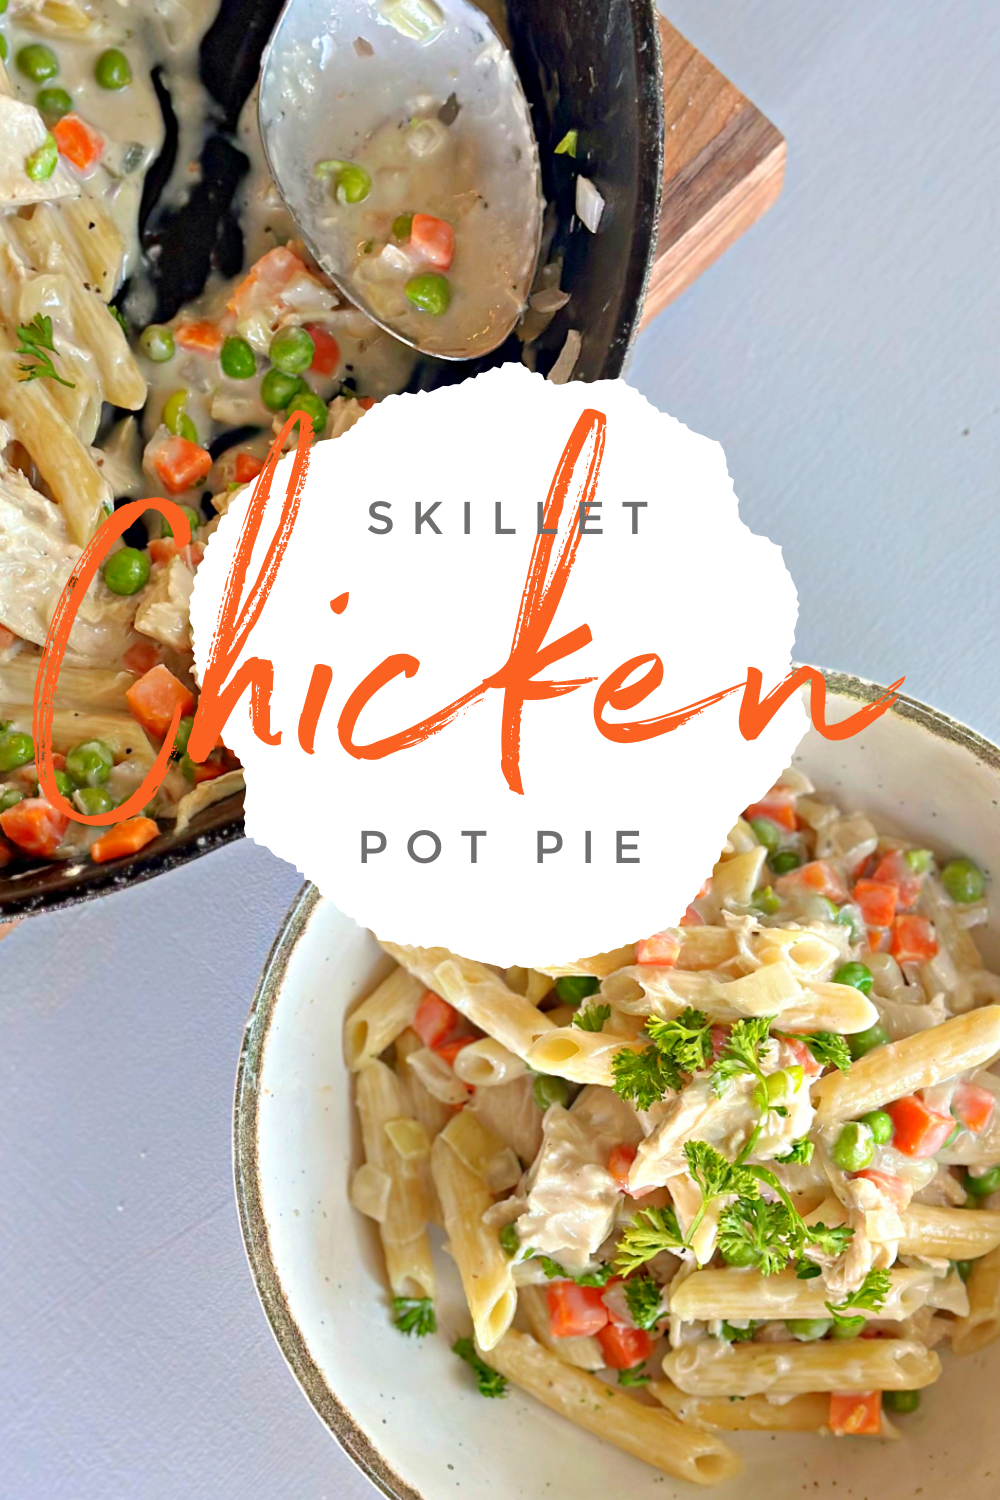 Skillet Chicken Pot Pie #chicken #potpie #skilletdinner #easydinnerrecipe #pasta #familydinner